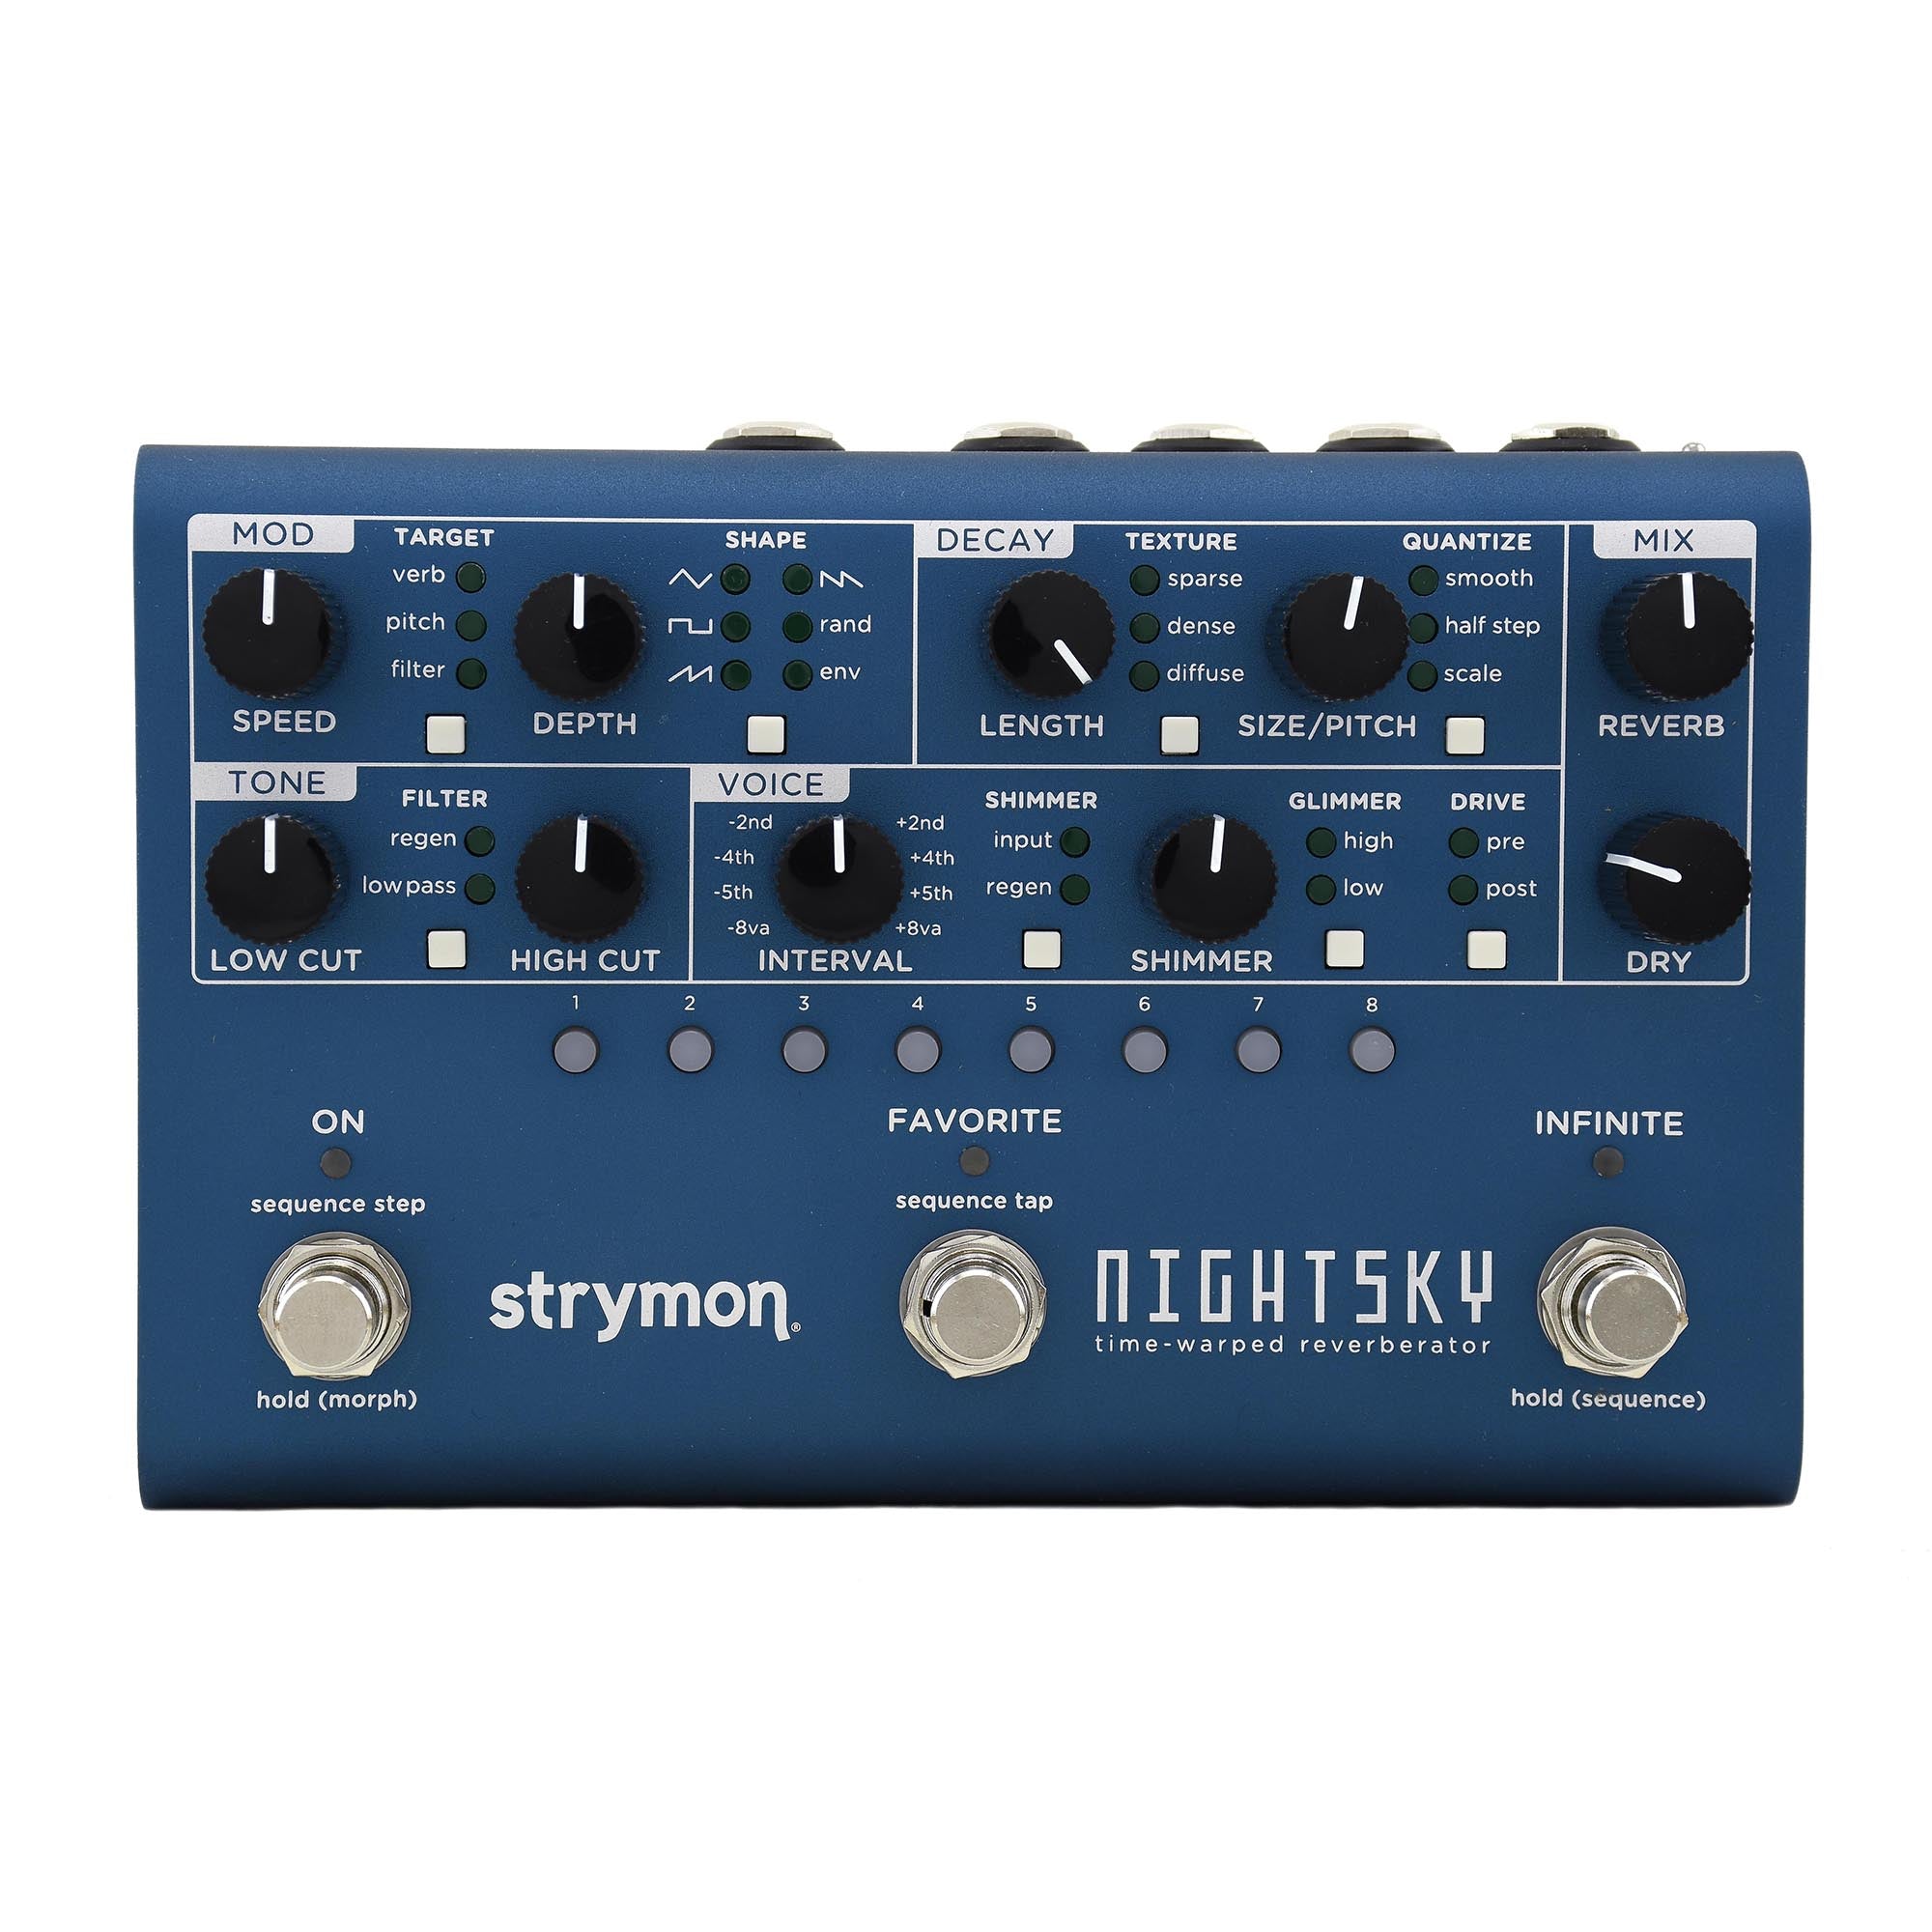 Strymon Nightsky Time Warped Reverberator Pedal